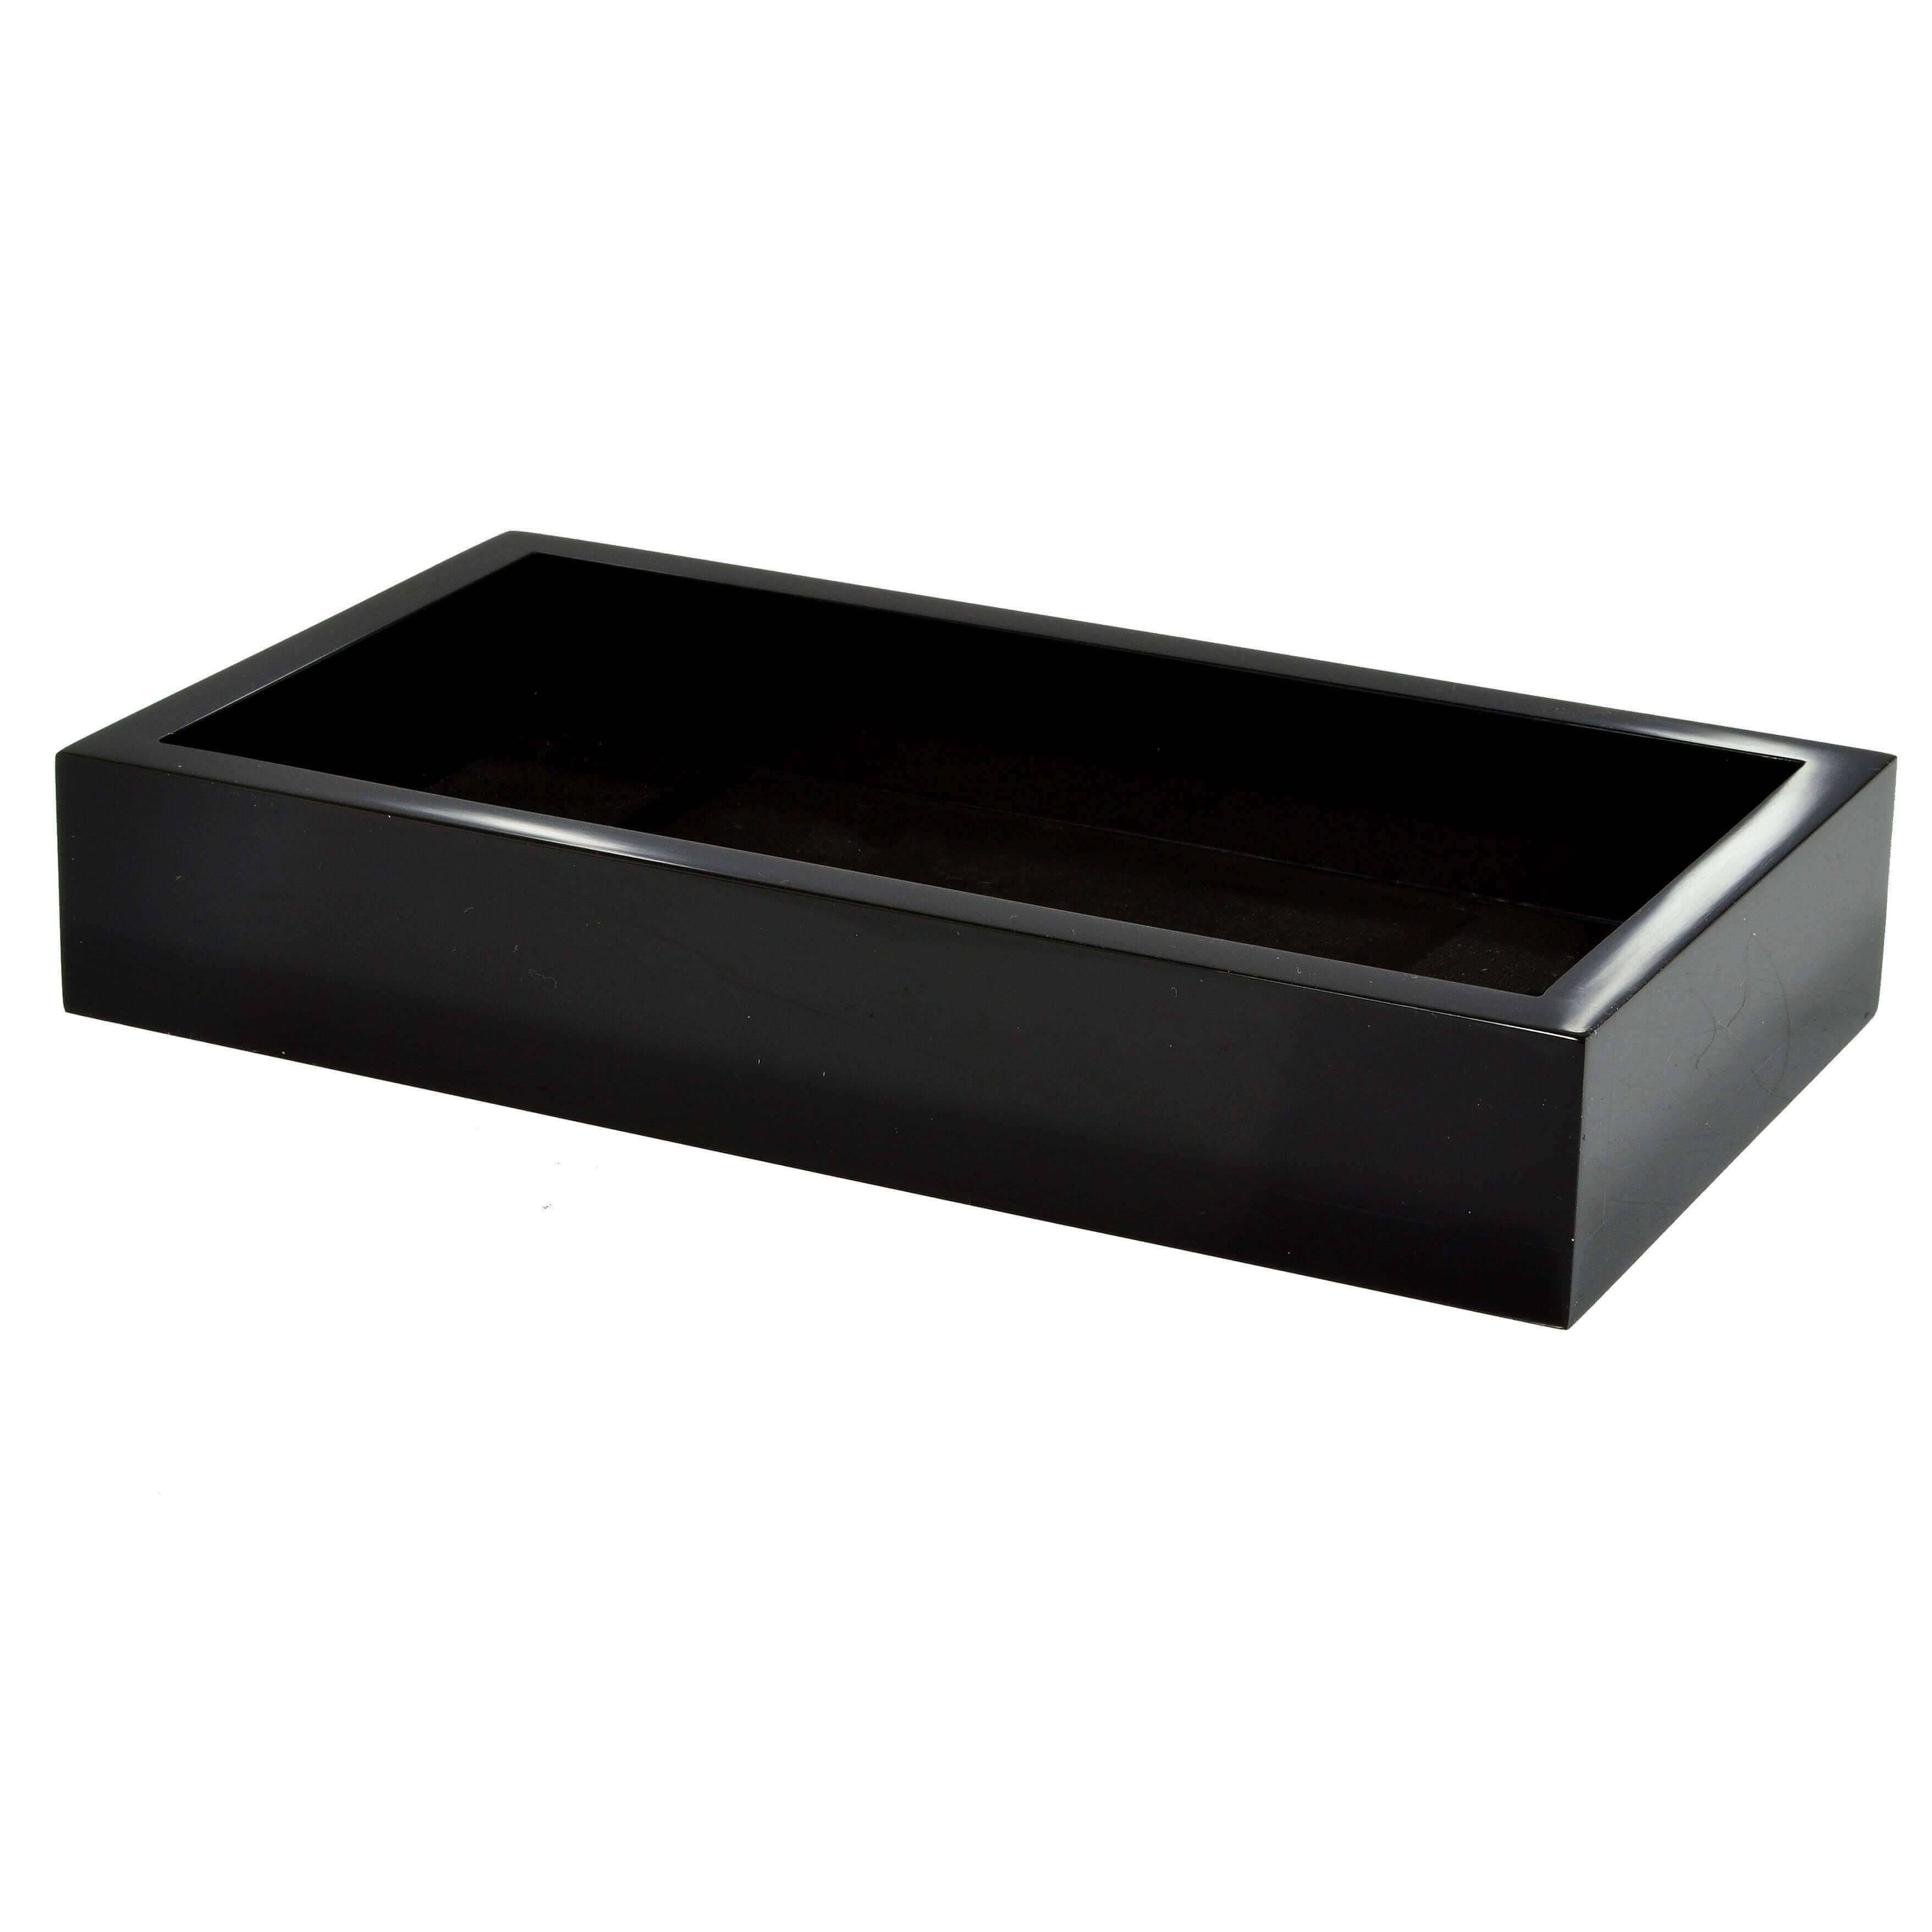 Mike + Ally - Ice Black Vanity tray - 31535 - Black - 